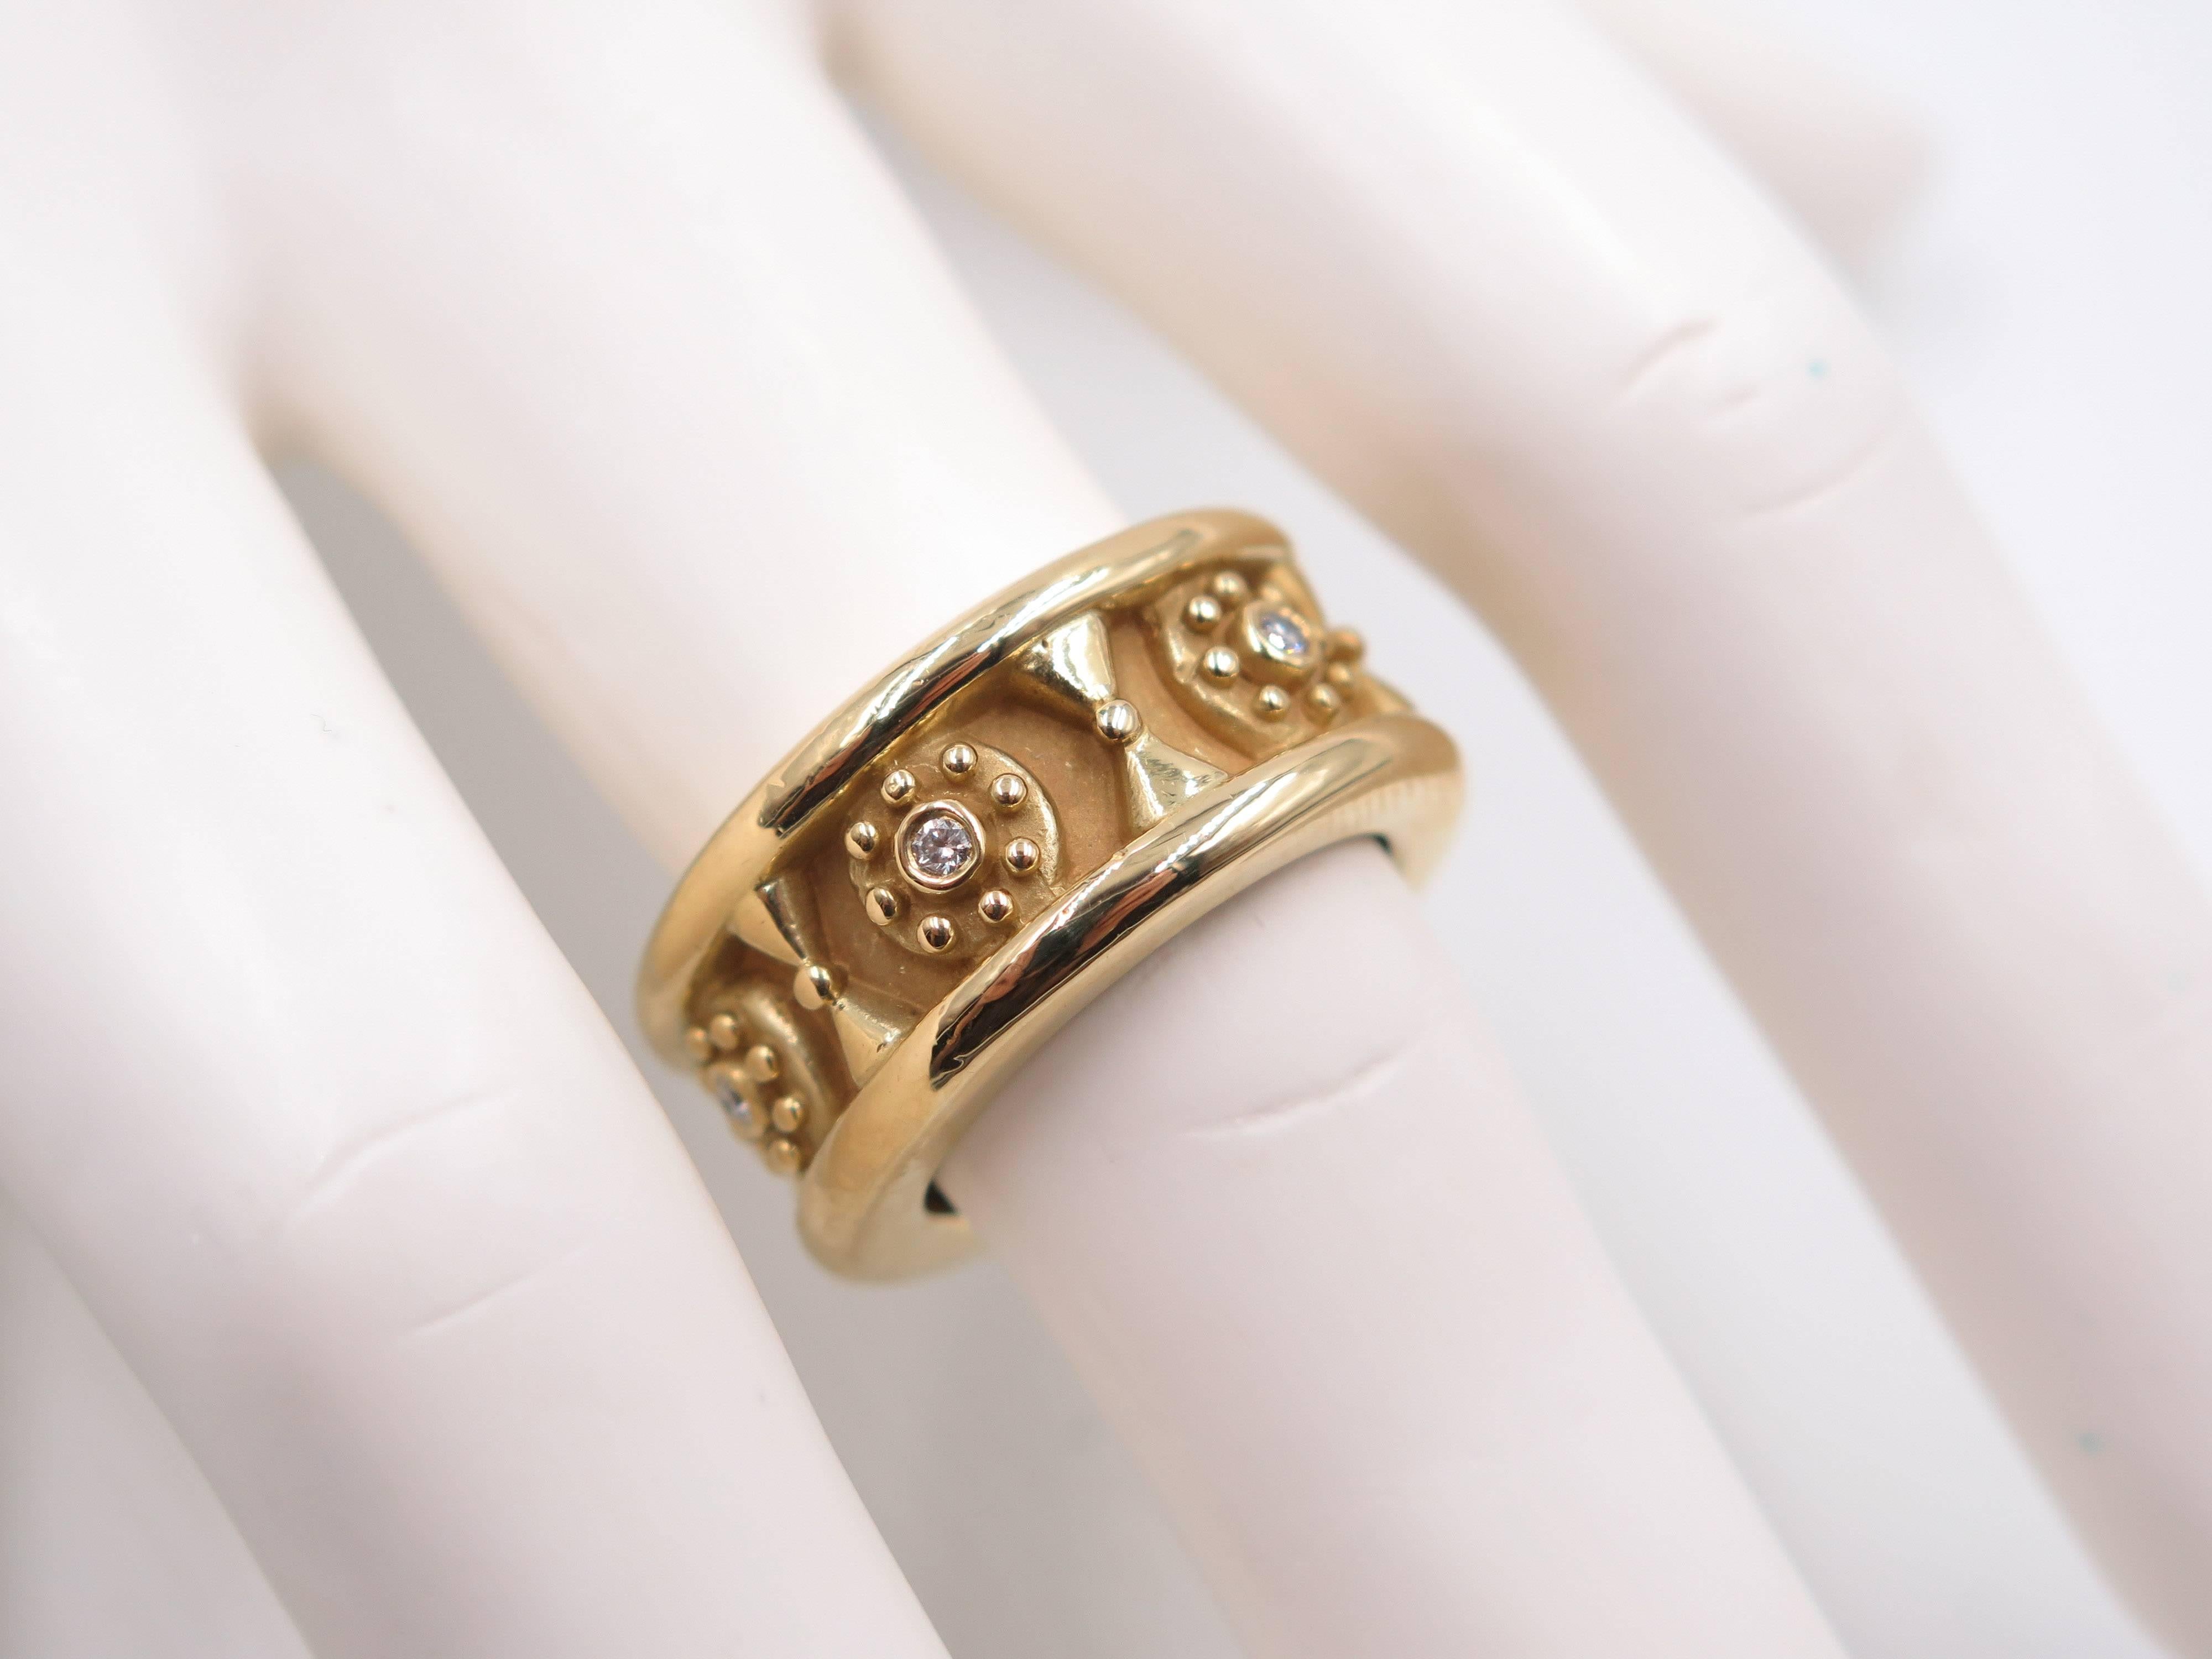 Women's Flower Designed Yellow Gold Ring by B. Kieselstein Cord